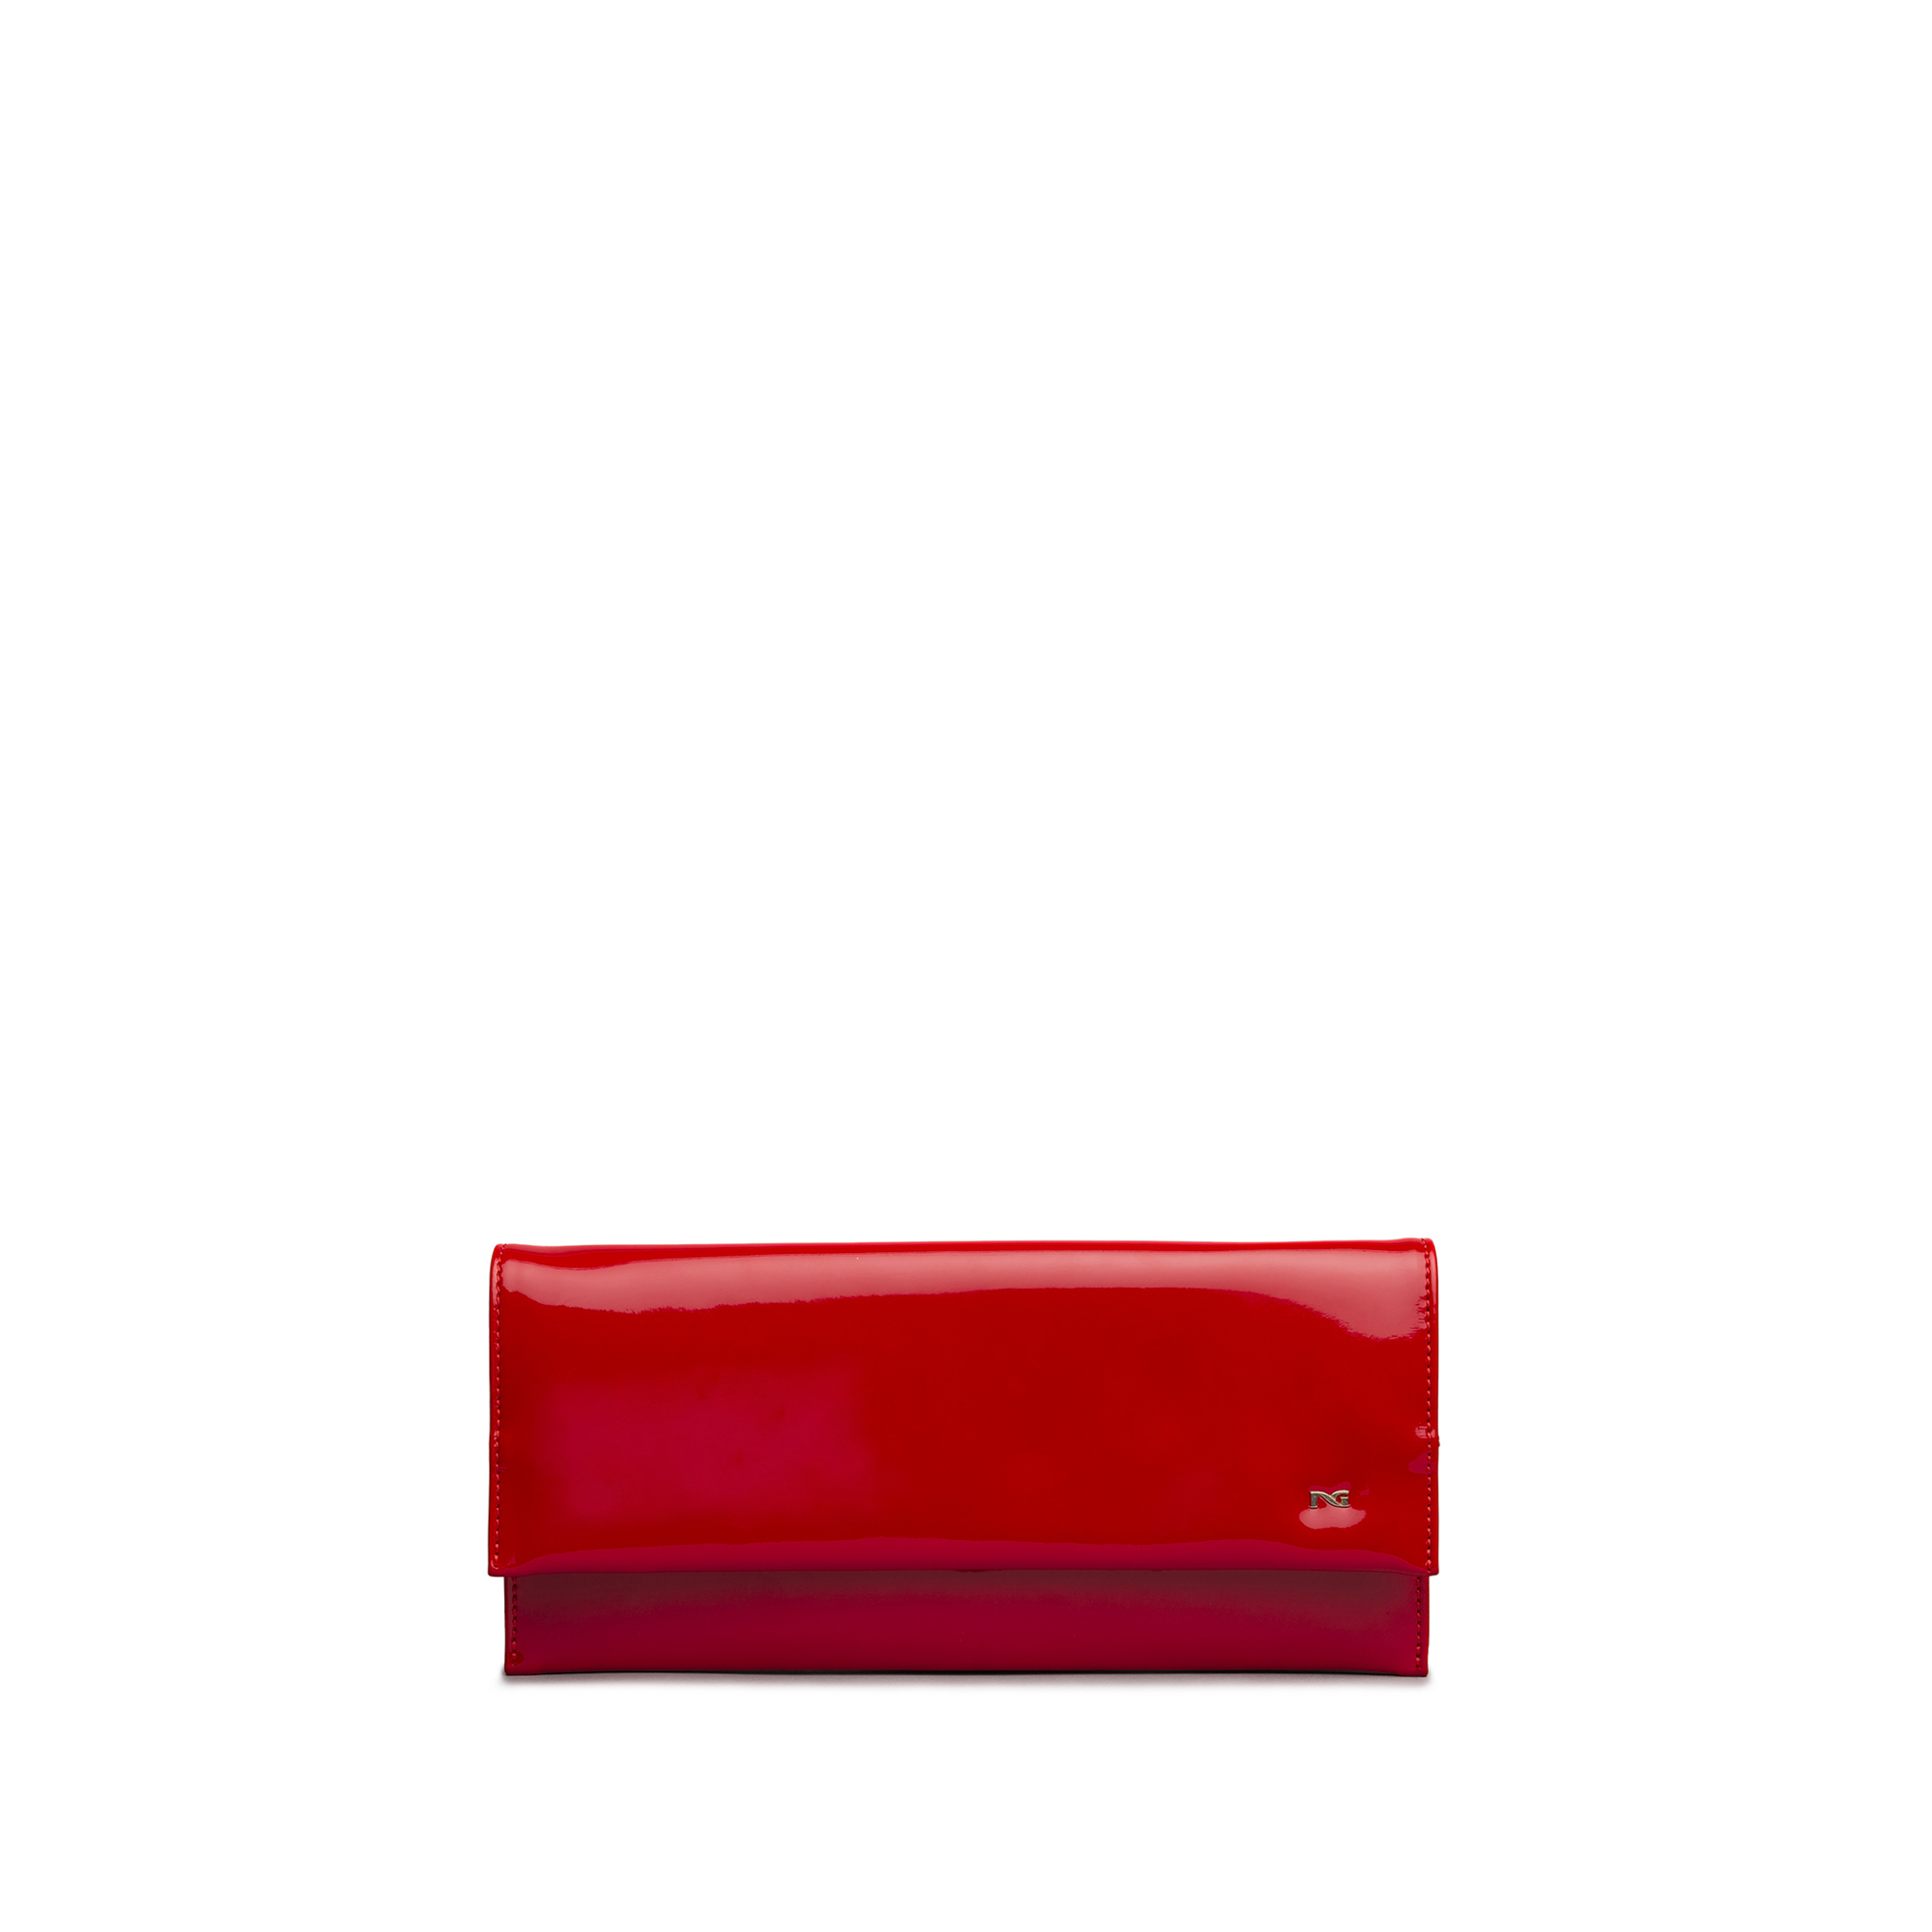 Buy Red Silk Clutch (Handbag) for INR1149.50 | Biba India